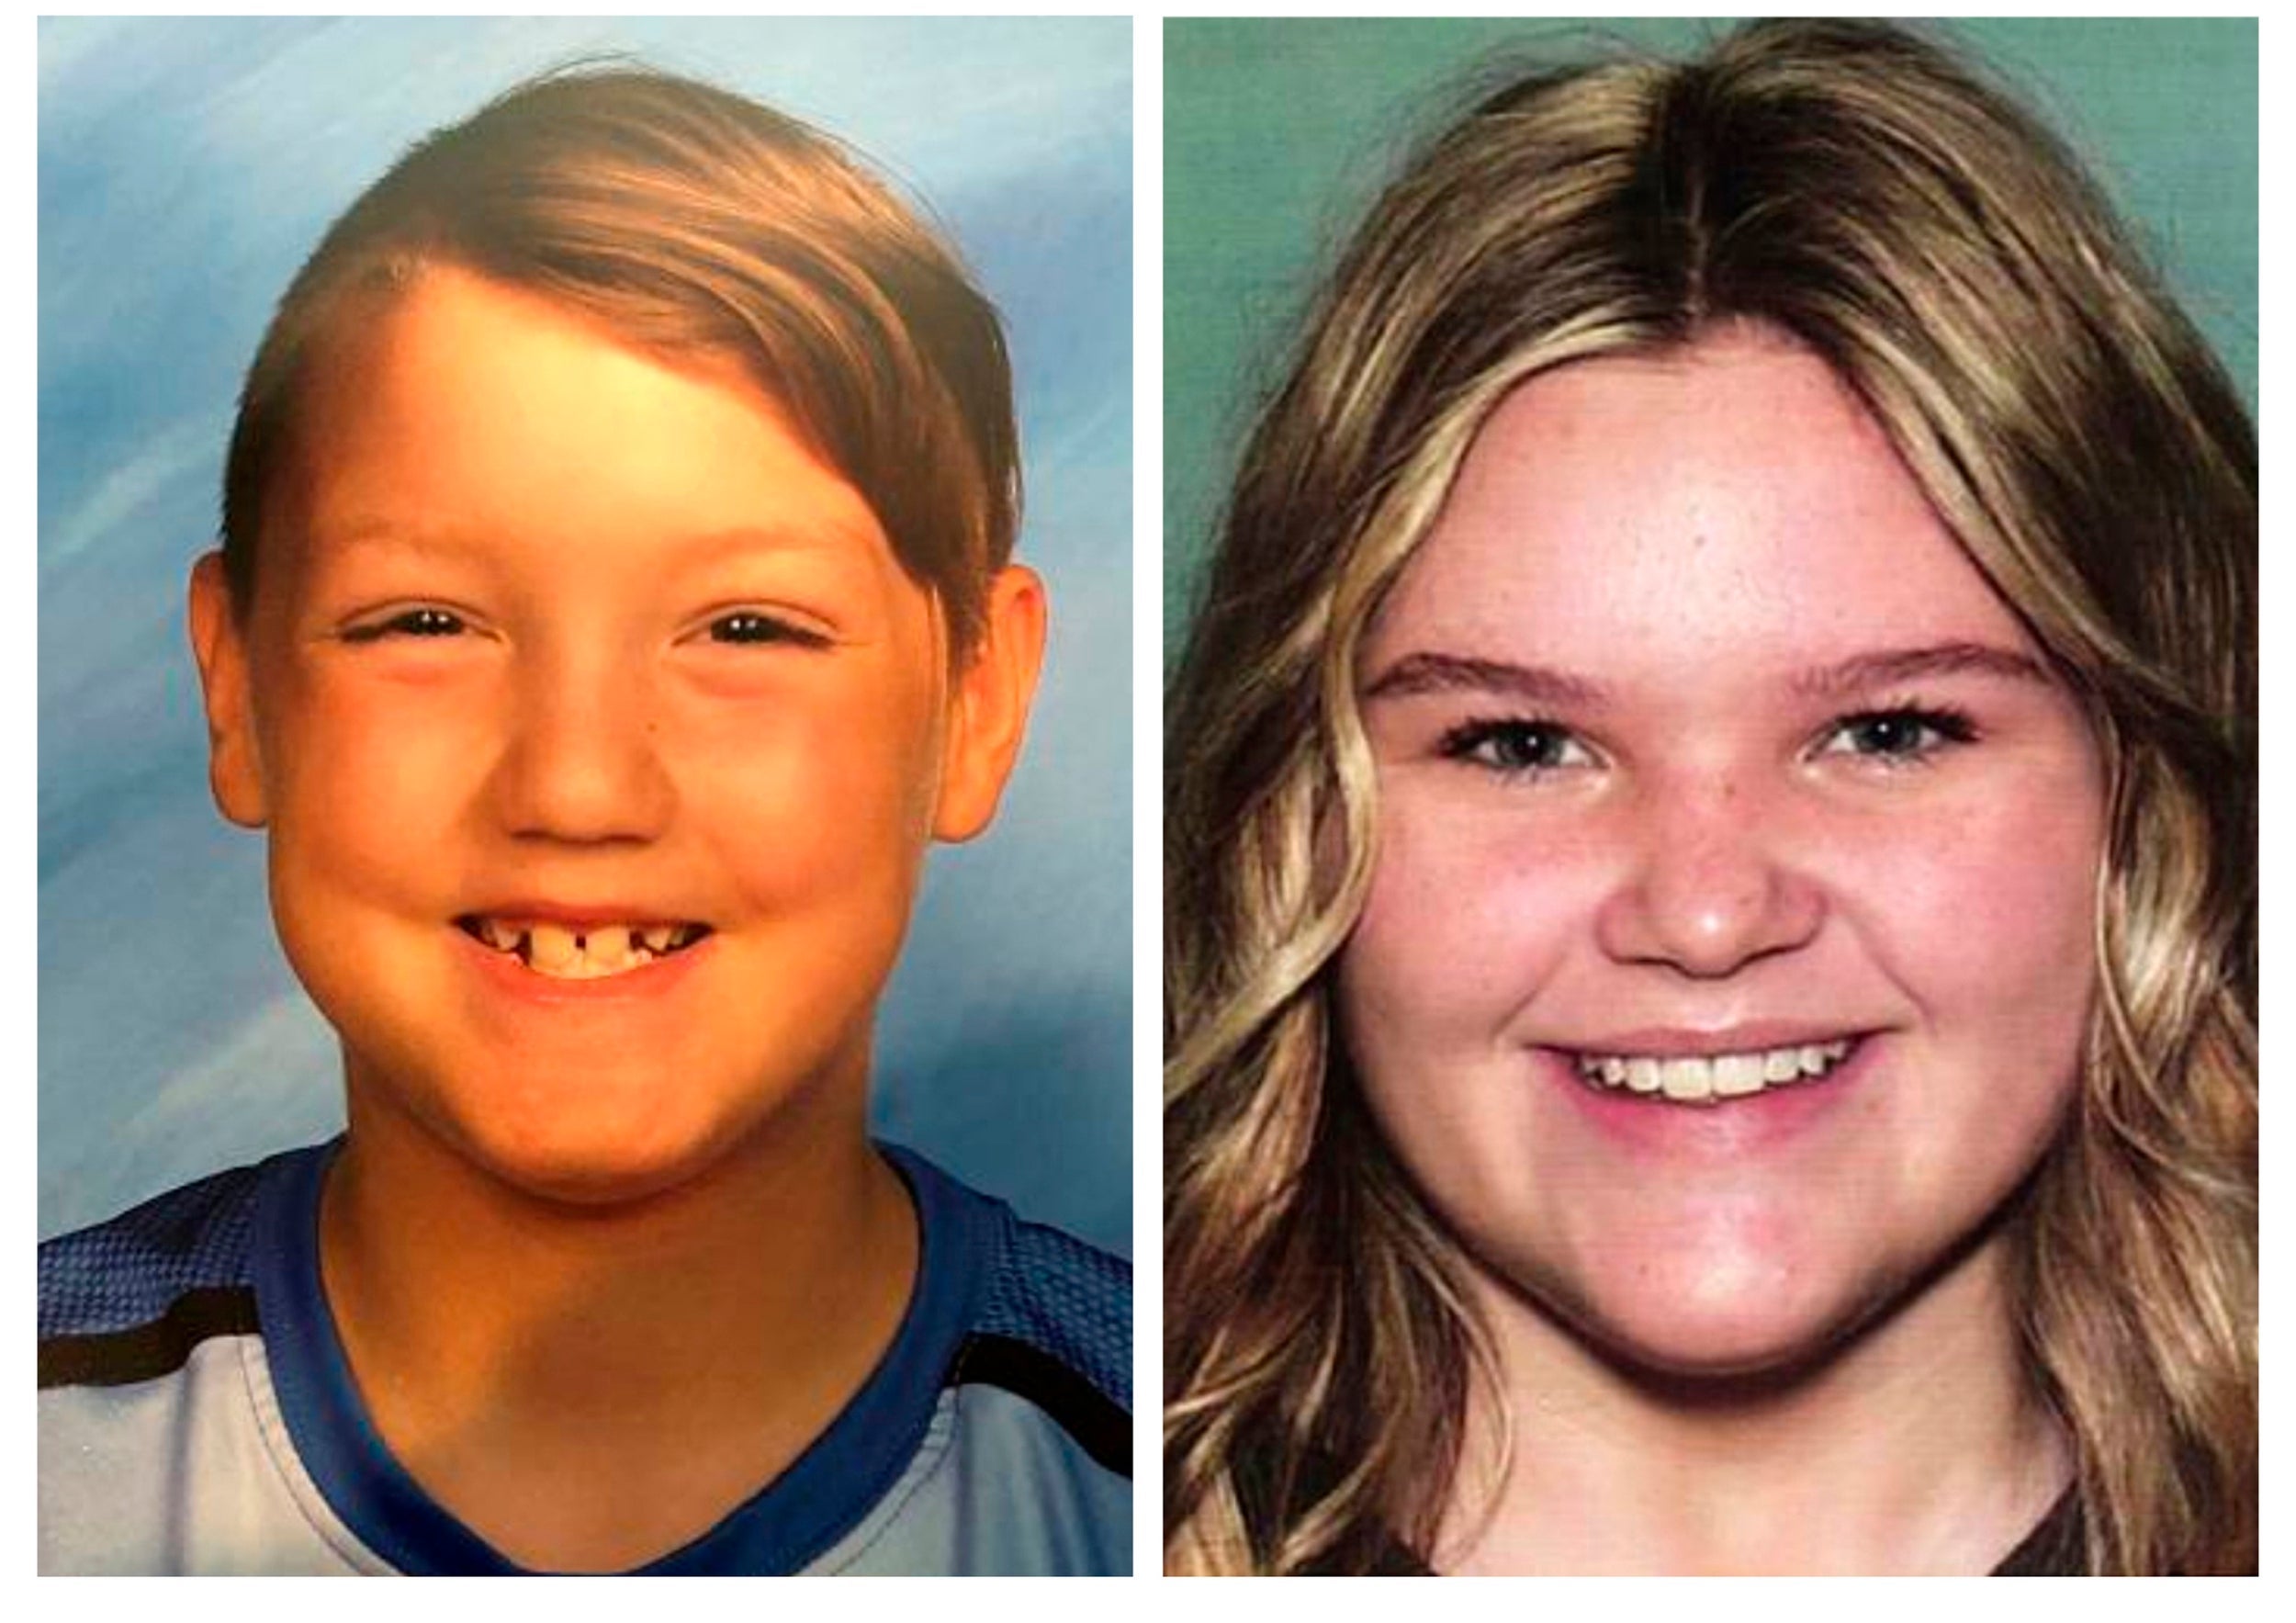 Joshua ‘JJ’ Vallow, seven, and Tylee Ryan, 16, were last seen alive in September 2019